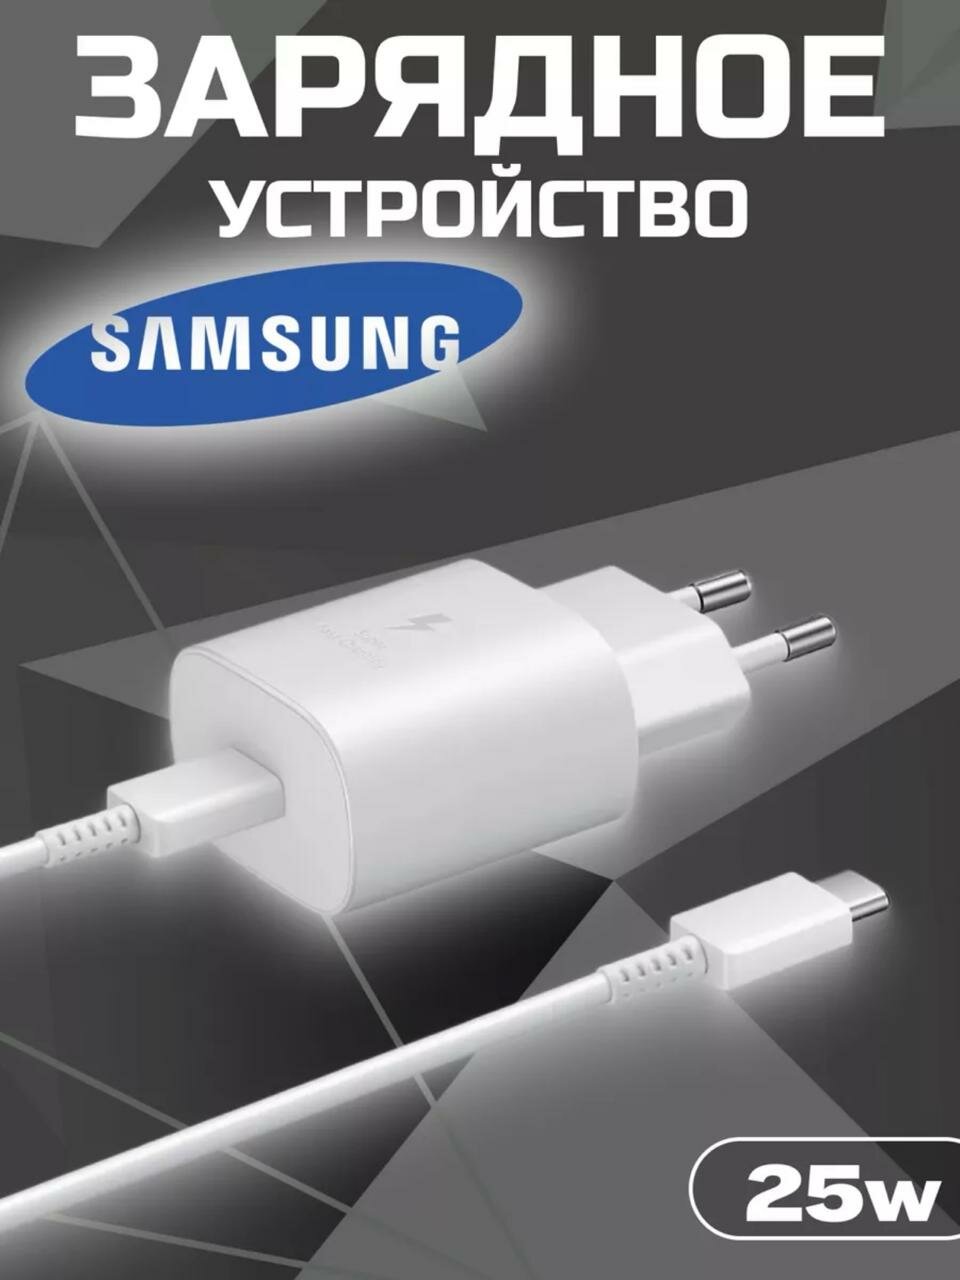 Адаптер для Samsung 25W USB-C + Кабель Type-C (3A), быстрая зарядка, белый